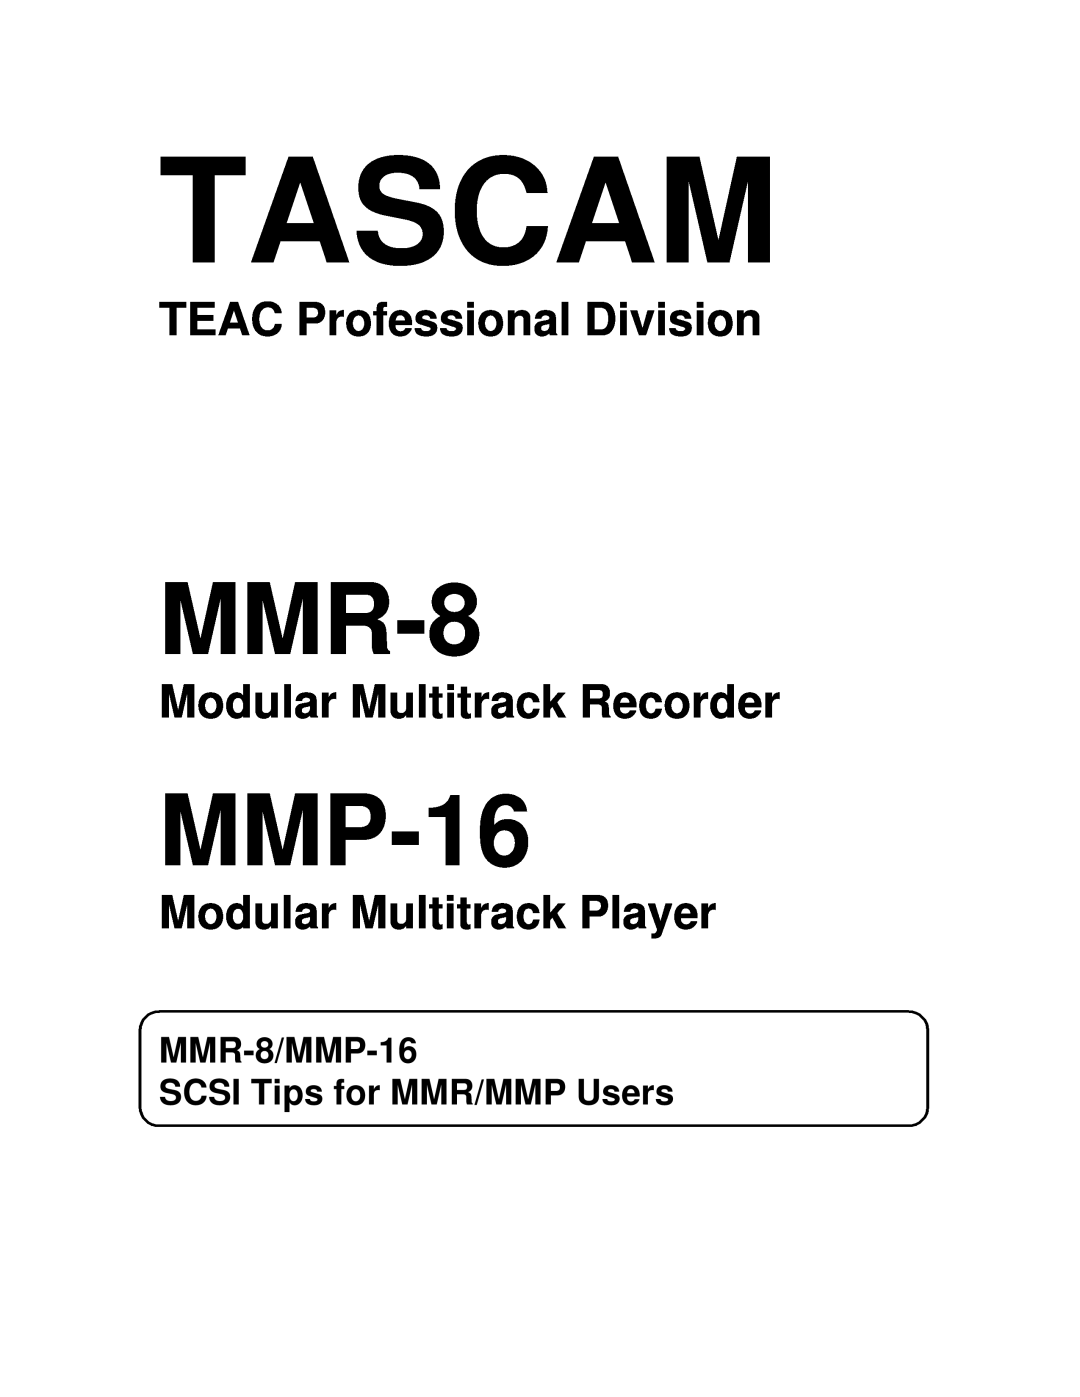 Tascam MMR-8 manual Tascam, TEAC Professional Division, Modular Multitrack Recorder, Modular Multitrack Player, MMP-16 